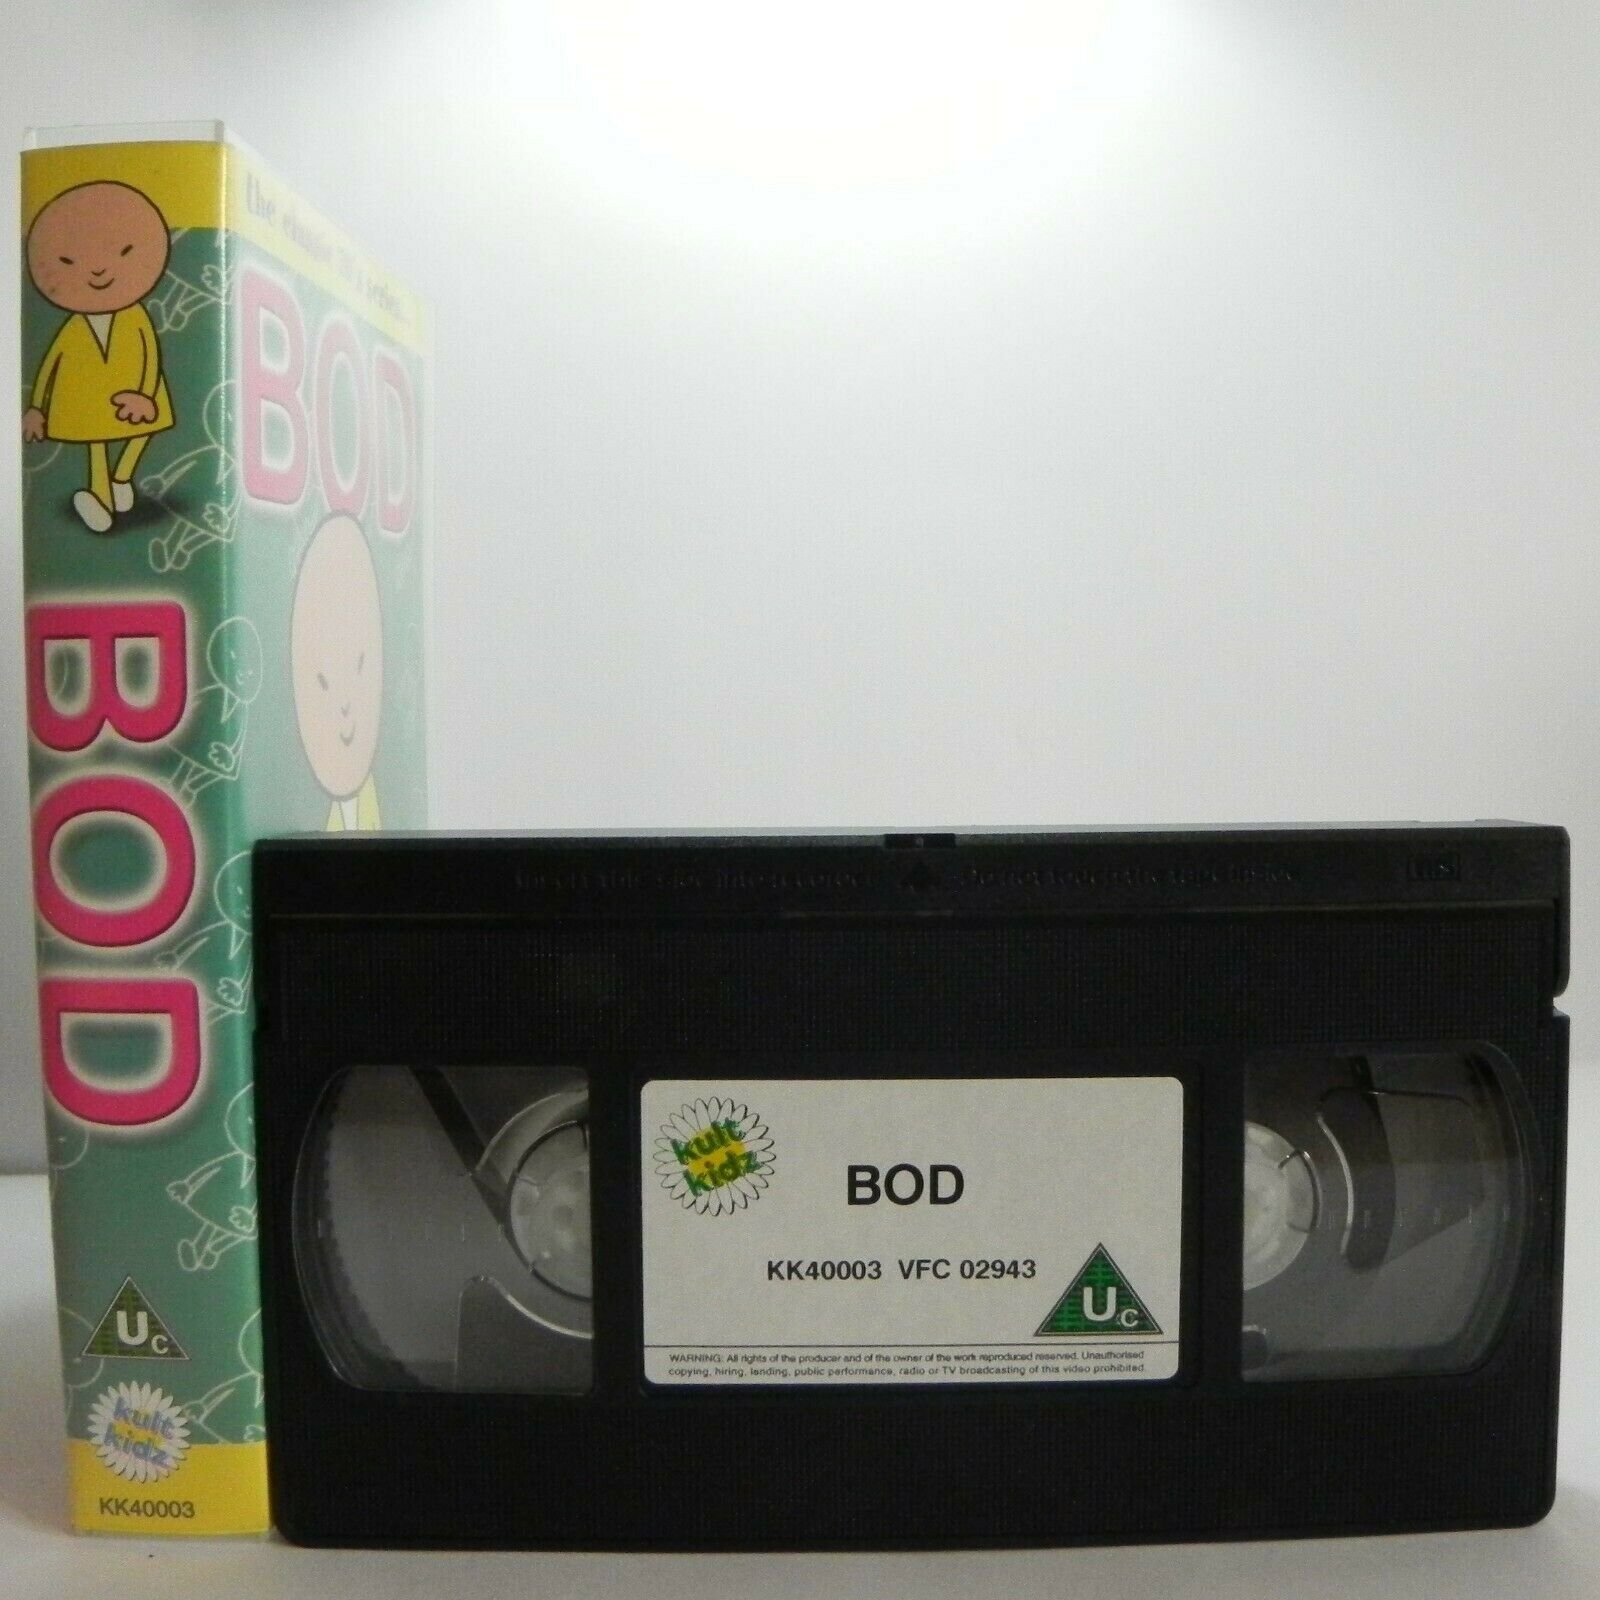 Bod - Classic 70' Series - 13 Episodes - Children's TV Animation - Pal VHS-